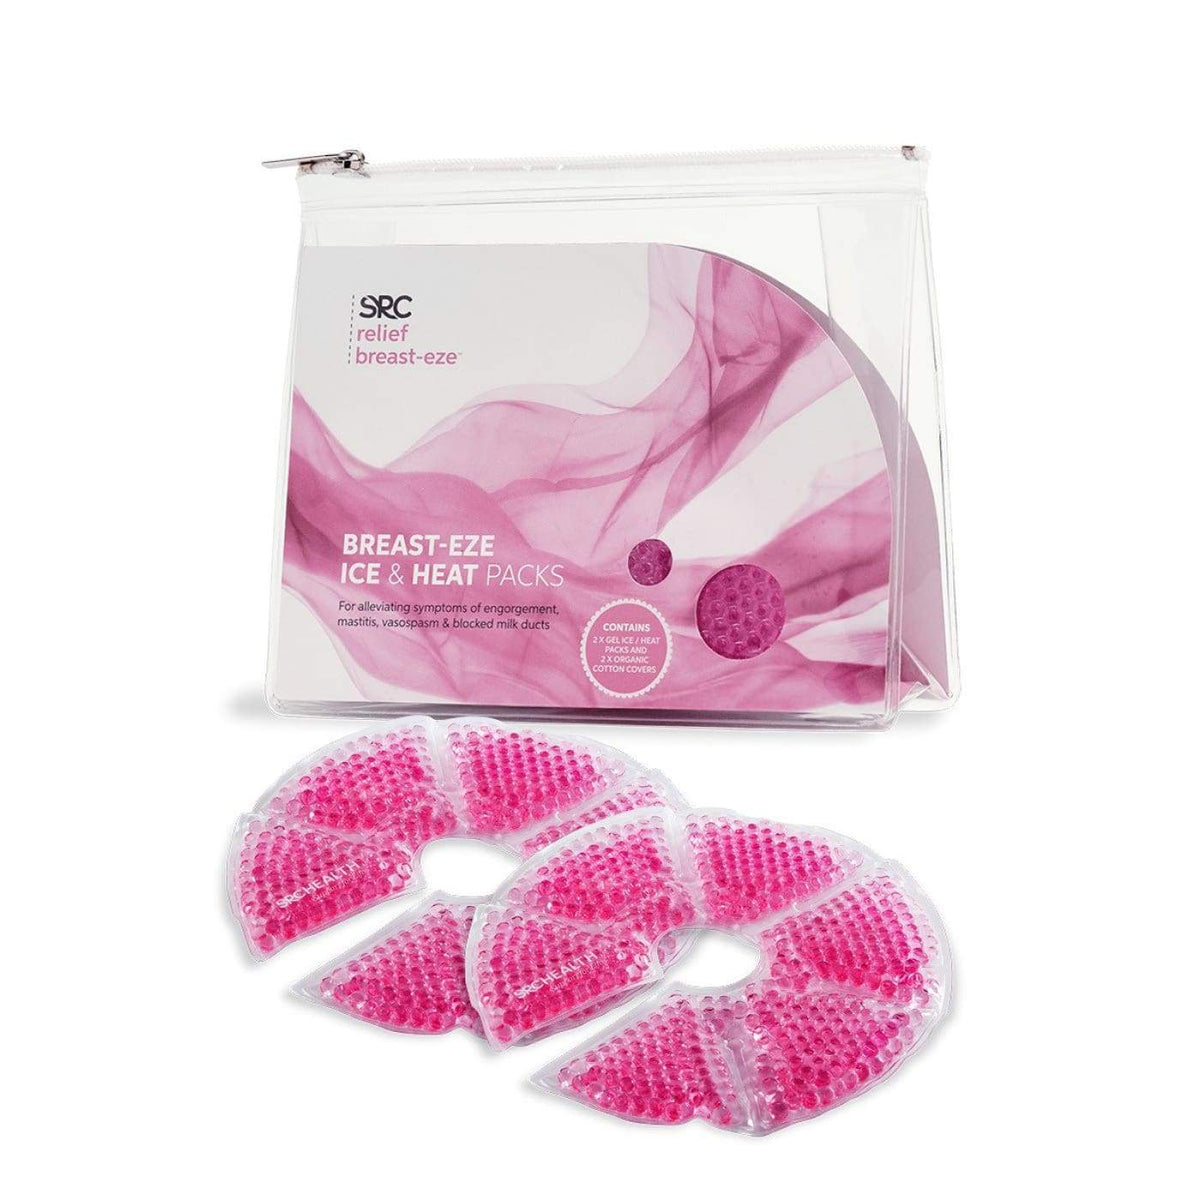 SRC Breast-Eze Ice &amp; Heat Packs with Organic Gloves 2PK - NURSING &amp; FEEDING - BREAST FEEDING AIDS/STORAGE